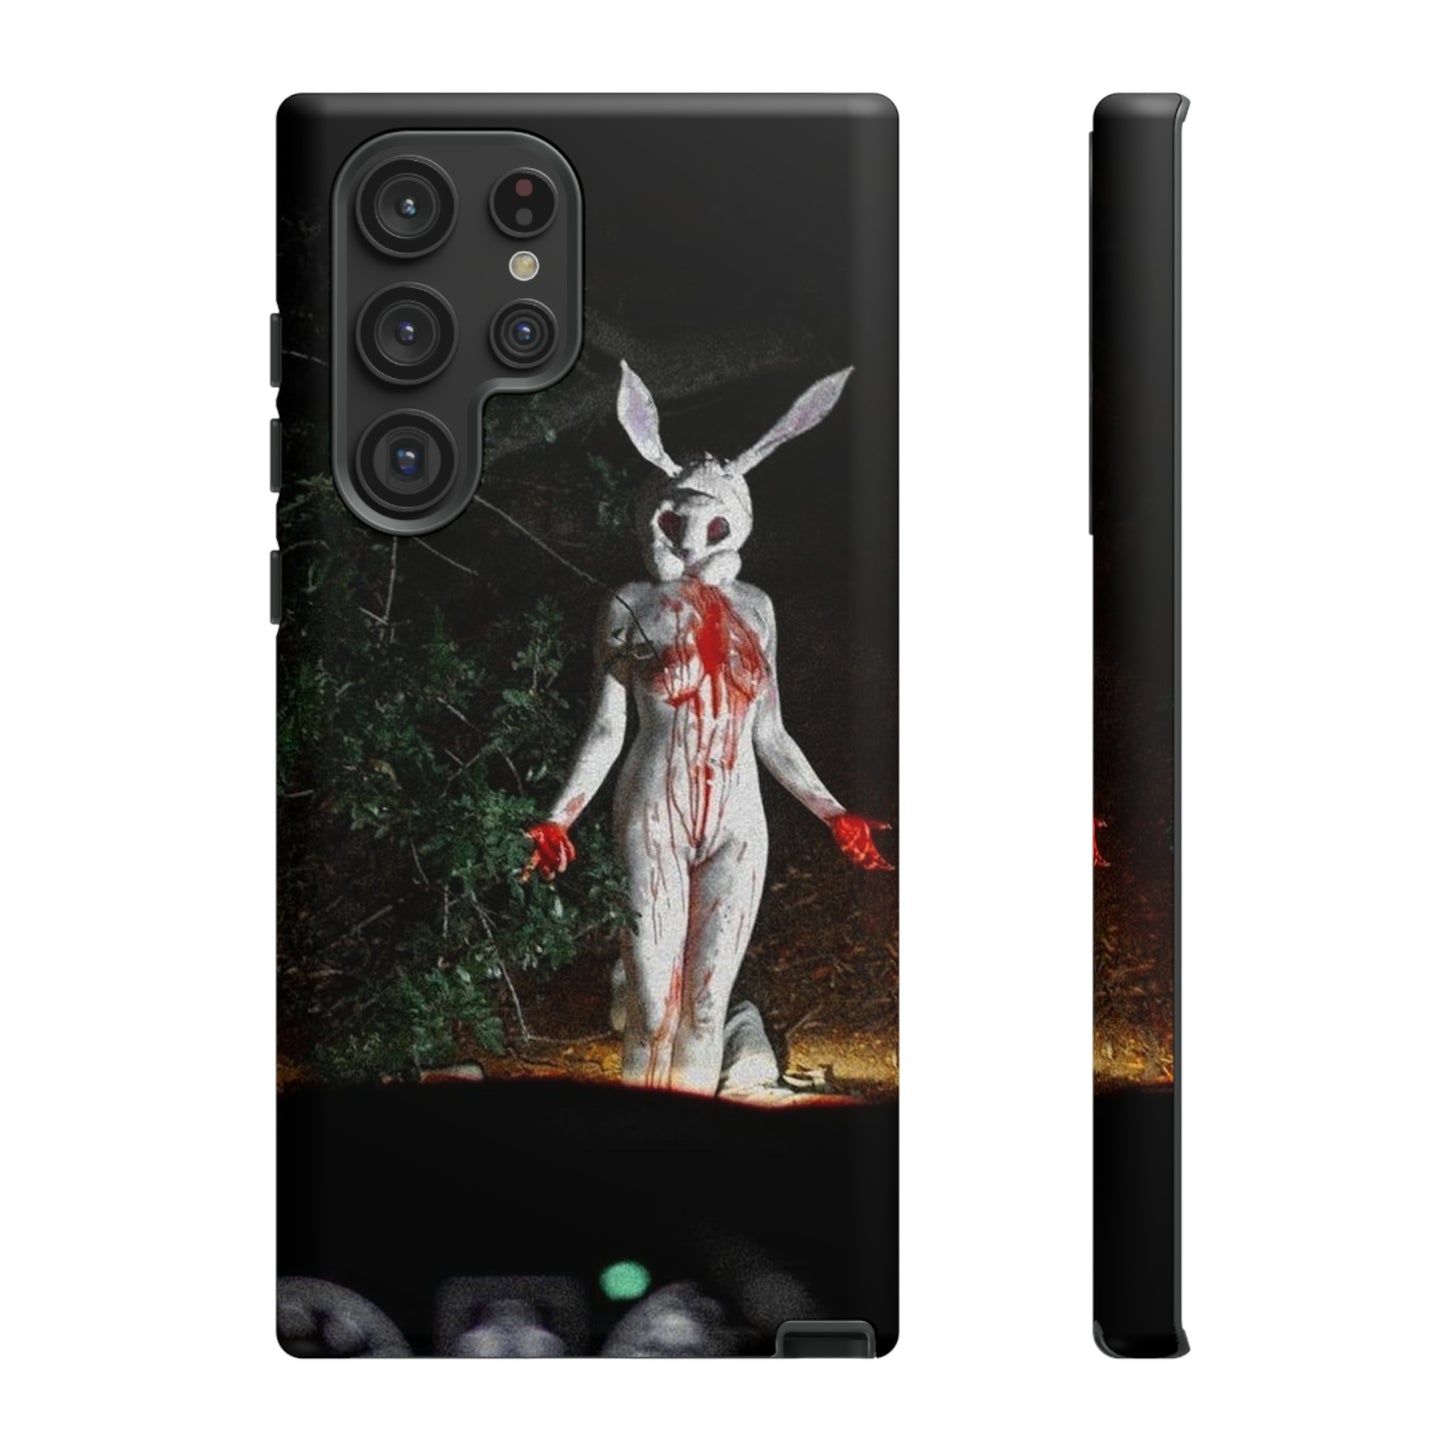 Blood Bunny Tough iPhone Case